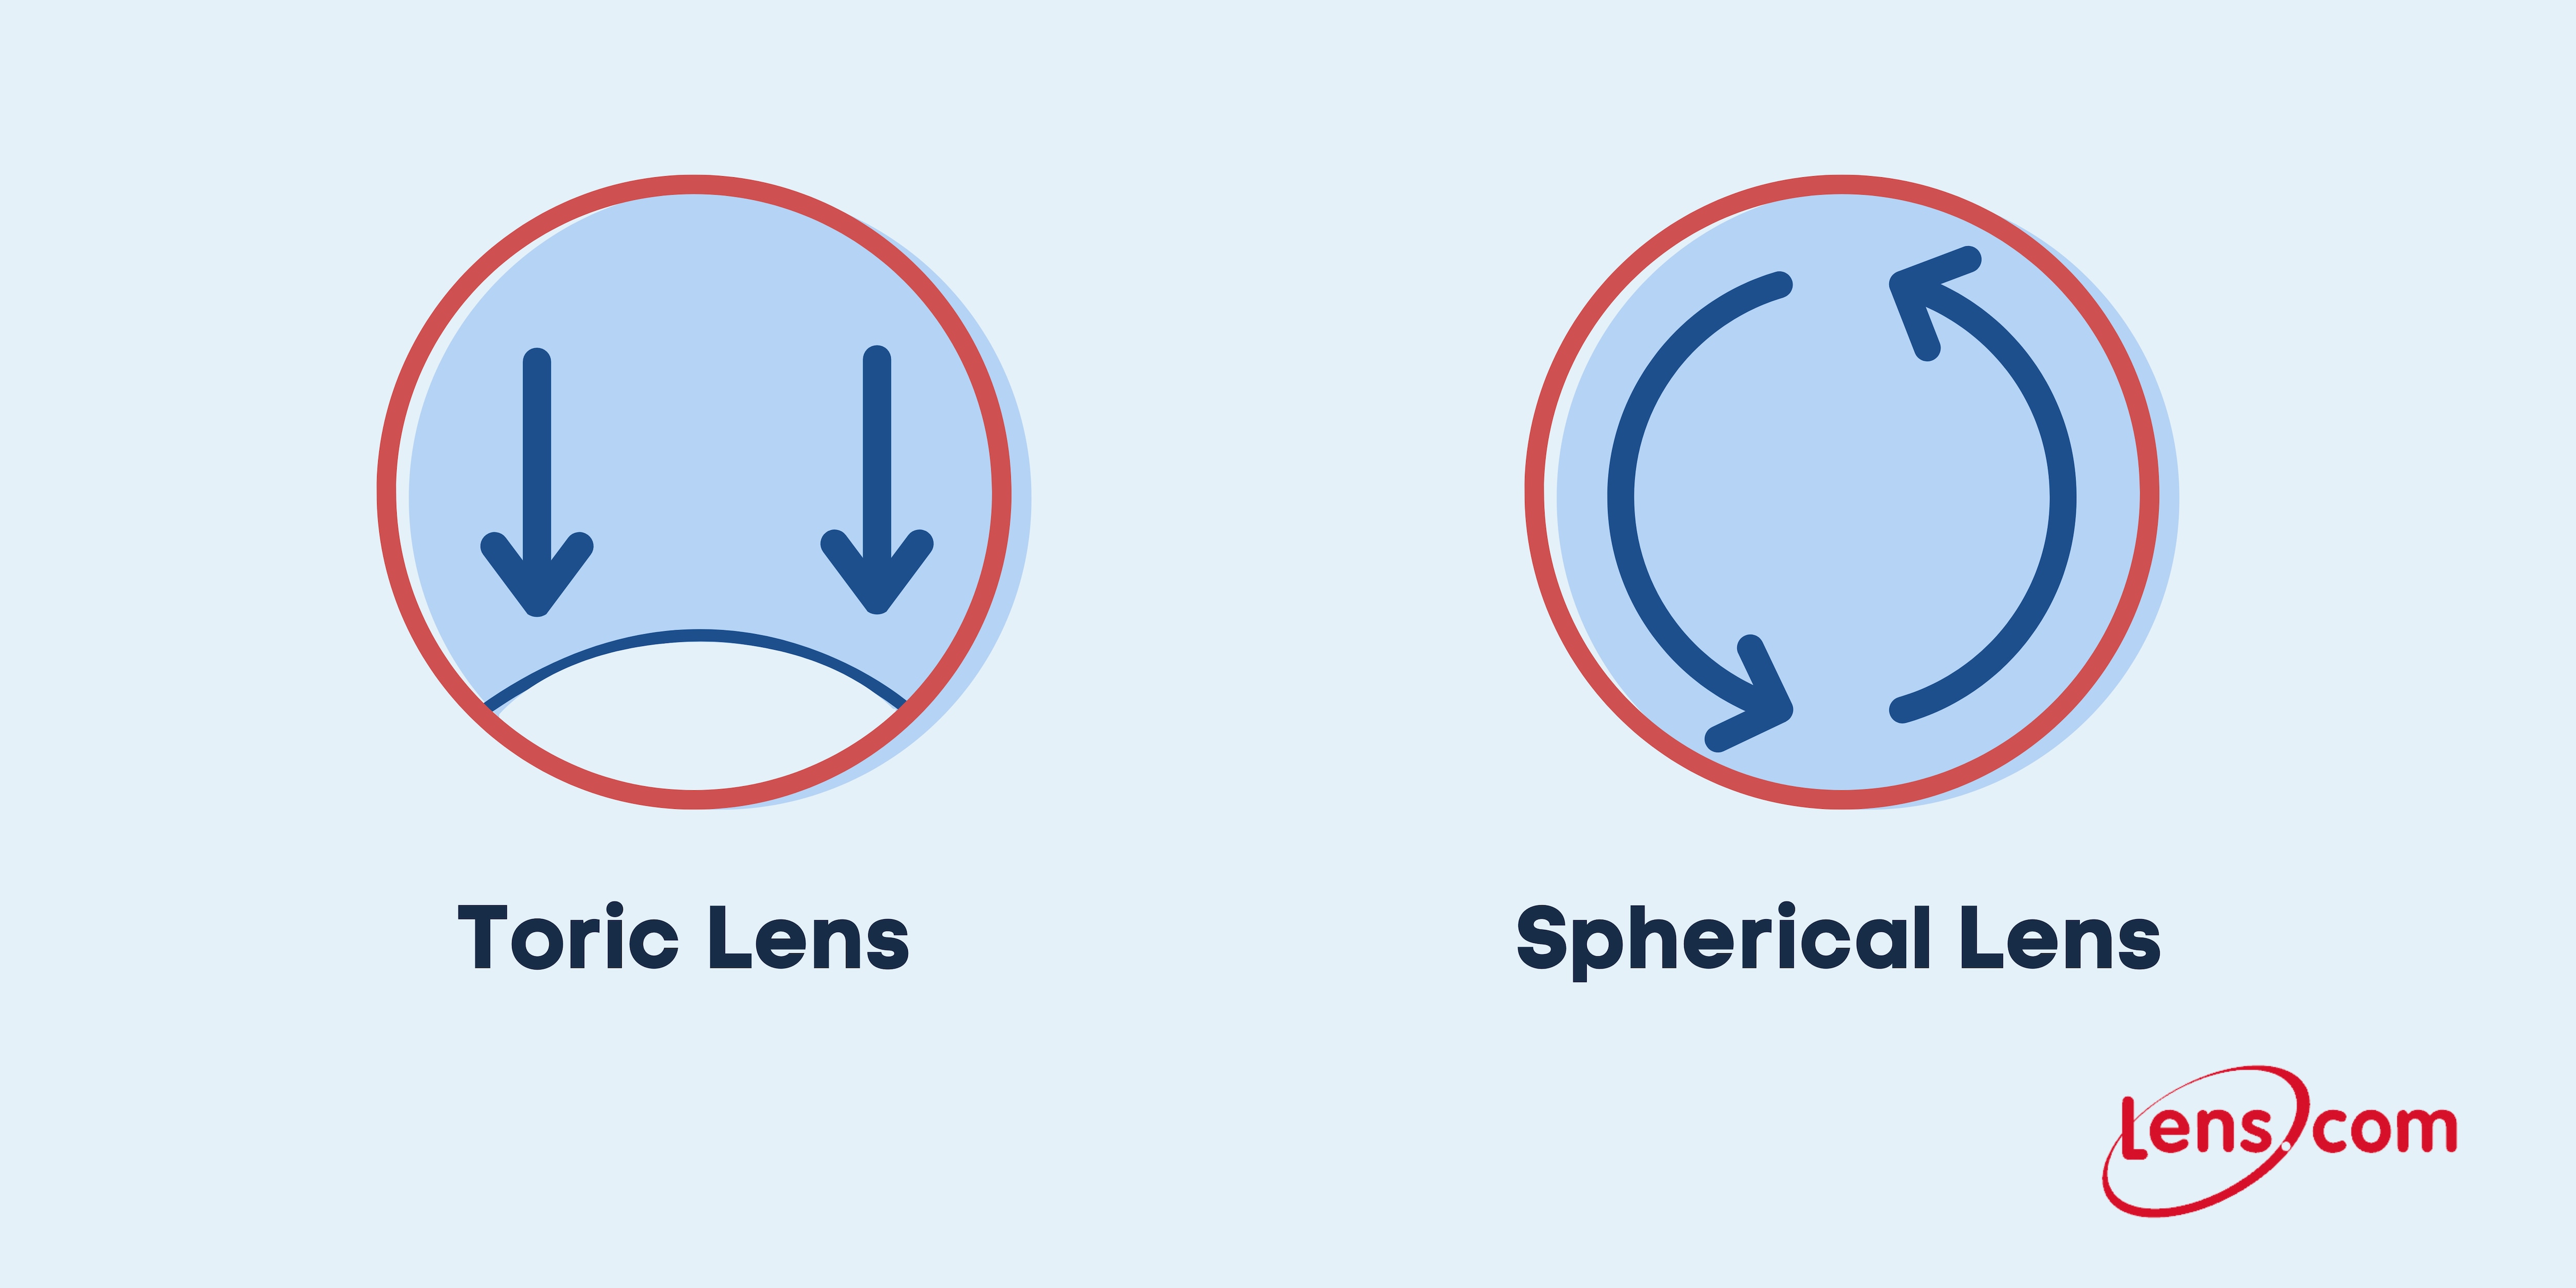 toric lenses orientation